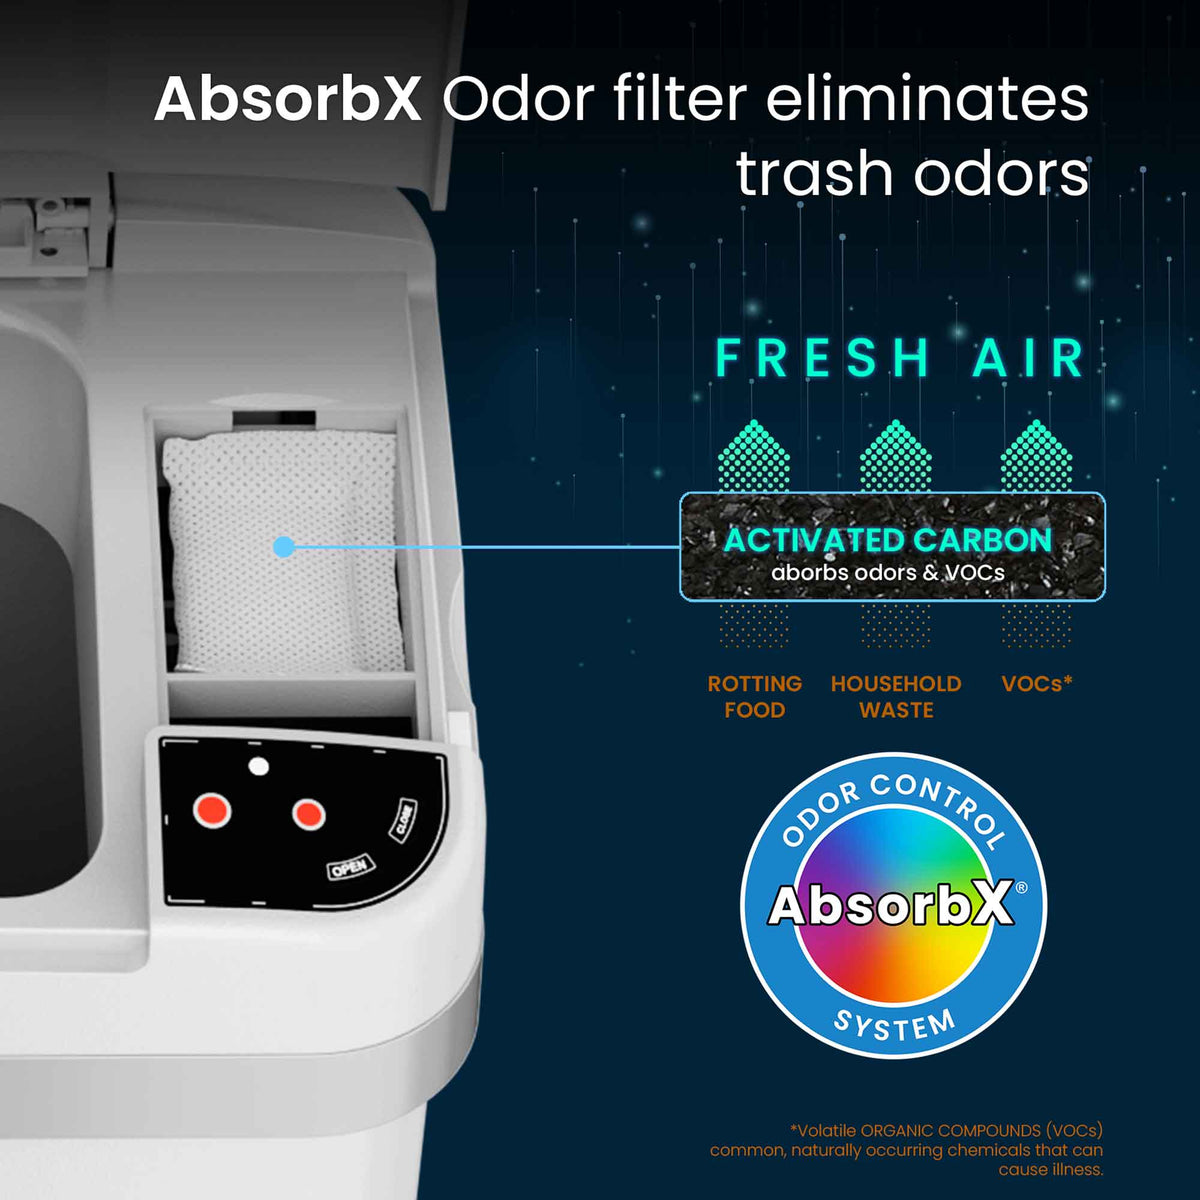 2.5 Gallon / 9.5 Liter White Sensor Bathroom Trash Can with Odor Filter and Lemon Fragrance eliminates trash odors